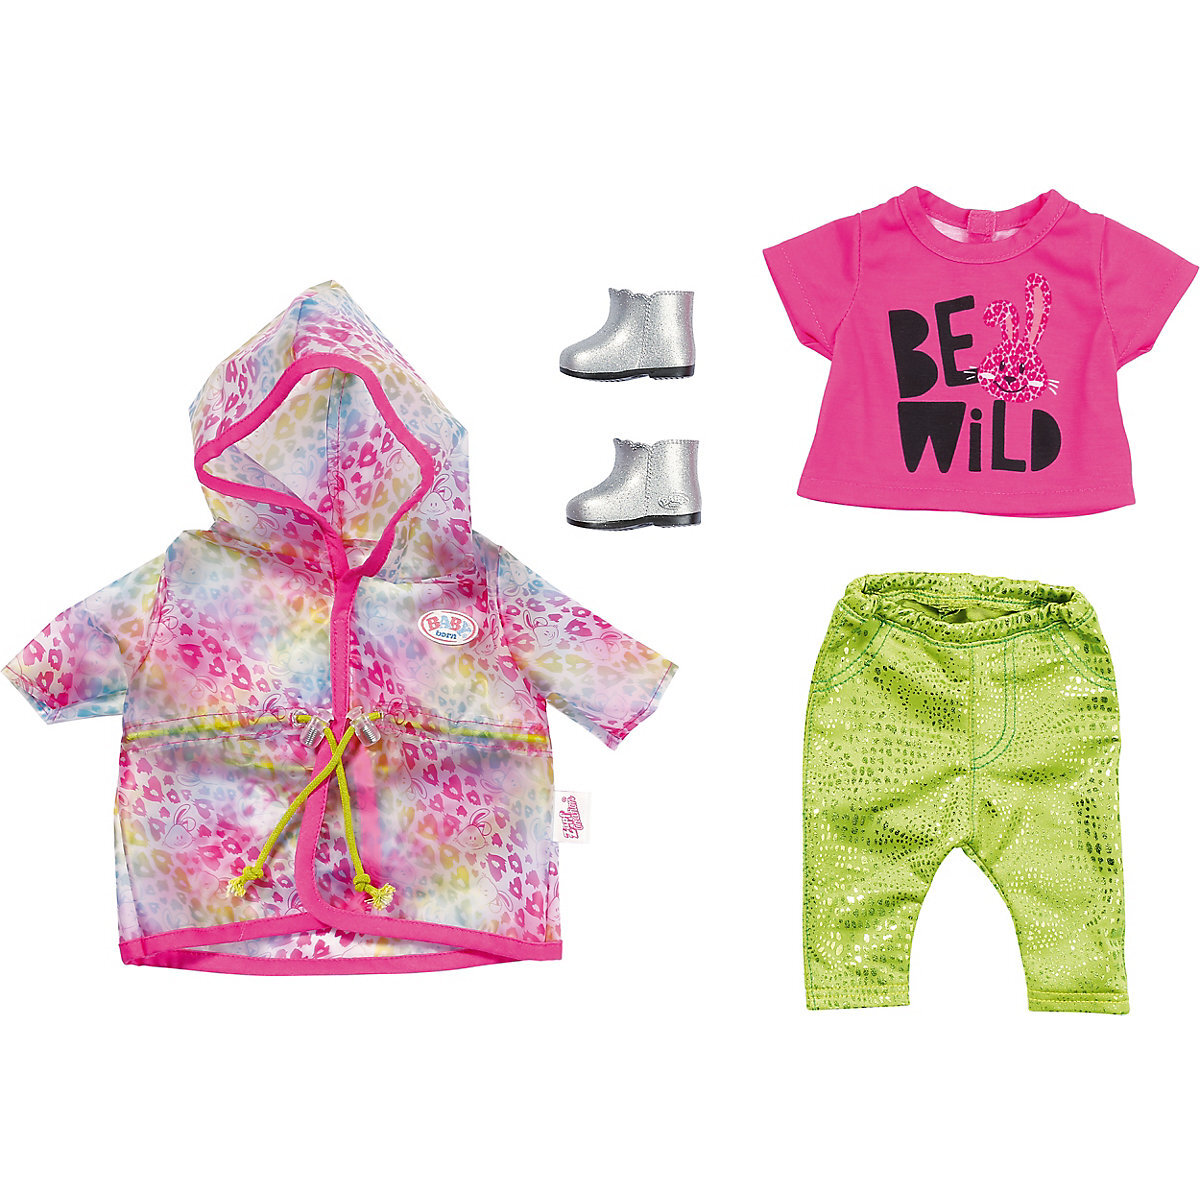 Zapf Creation комплект одежды для куклы Baby born 823828